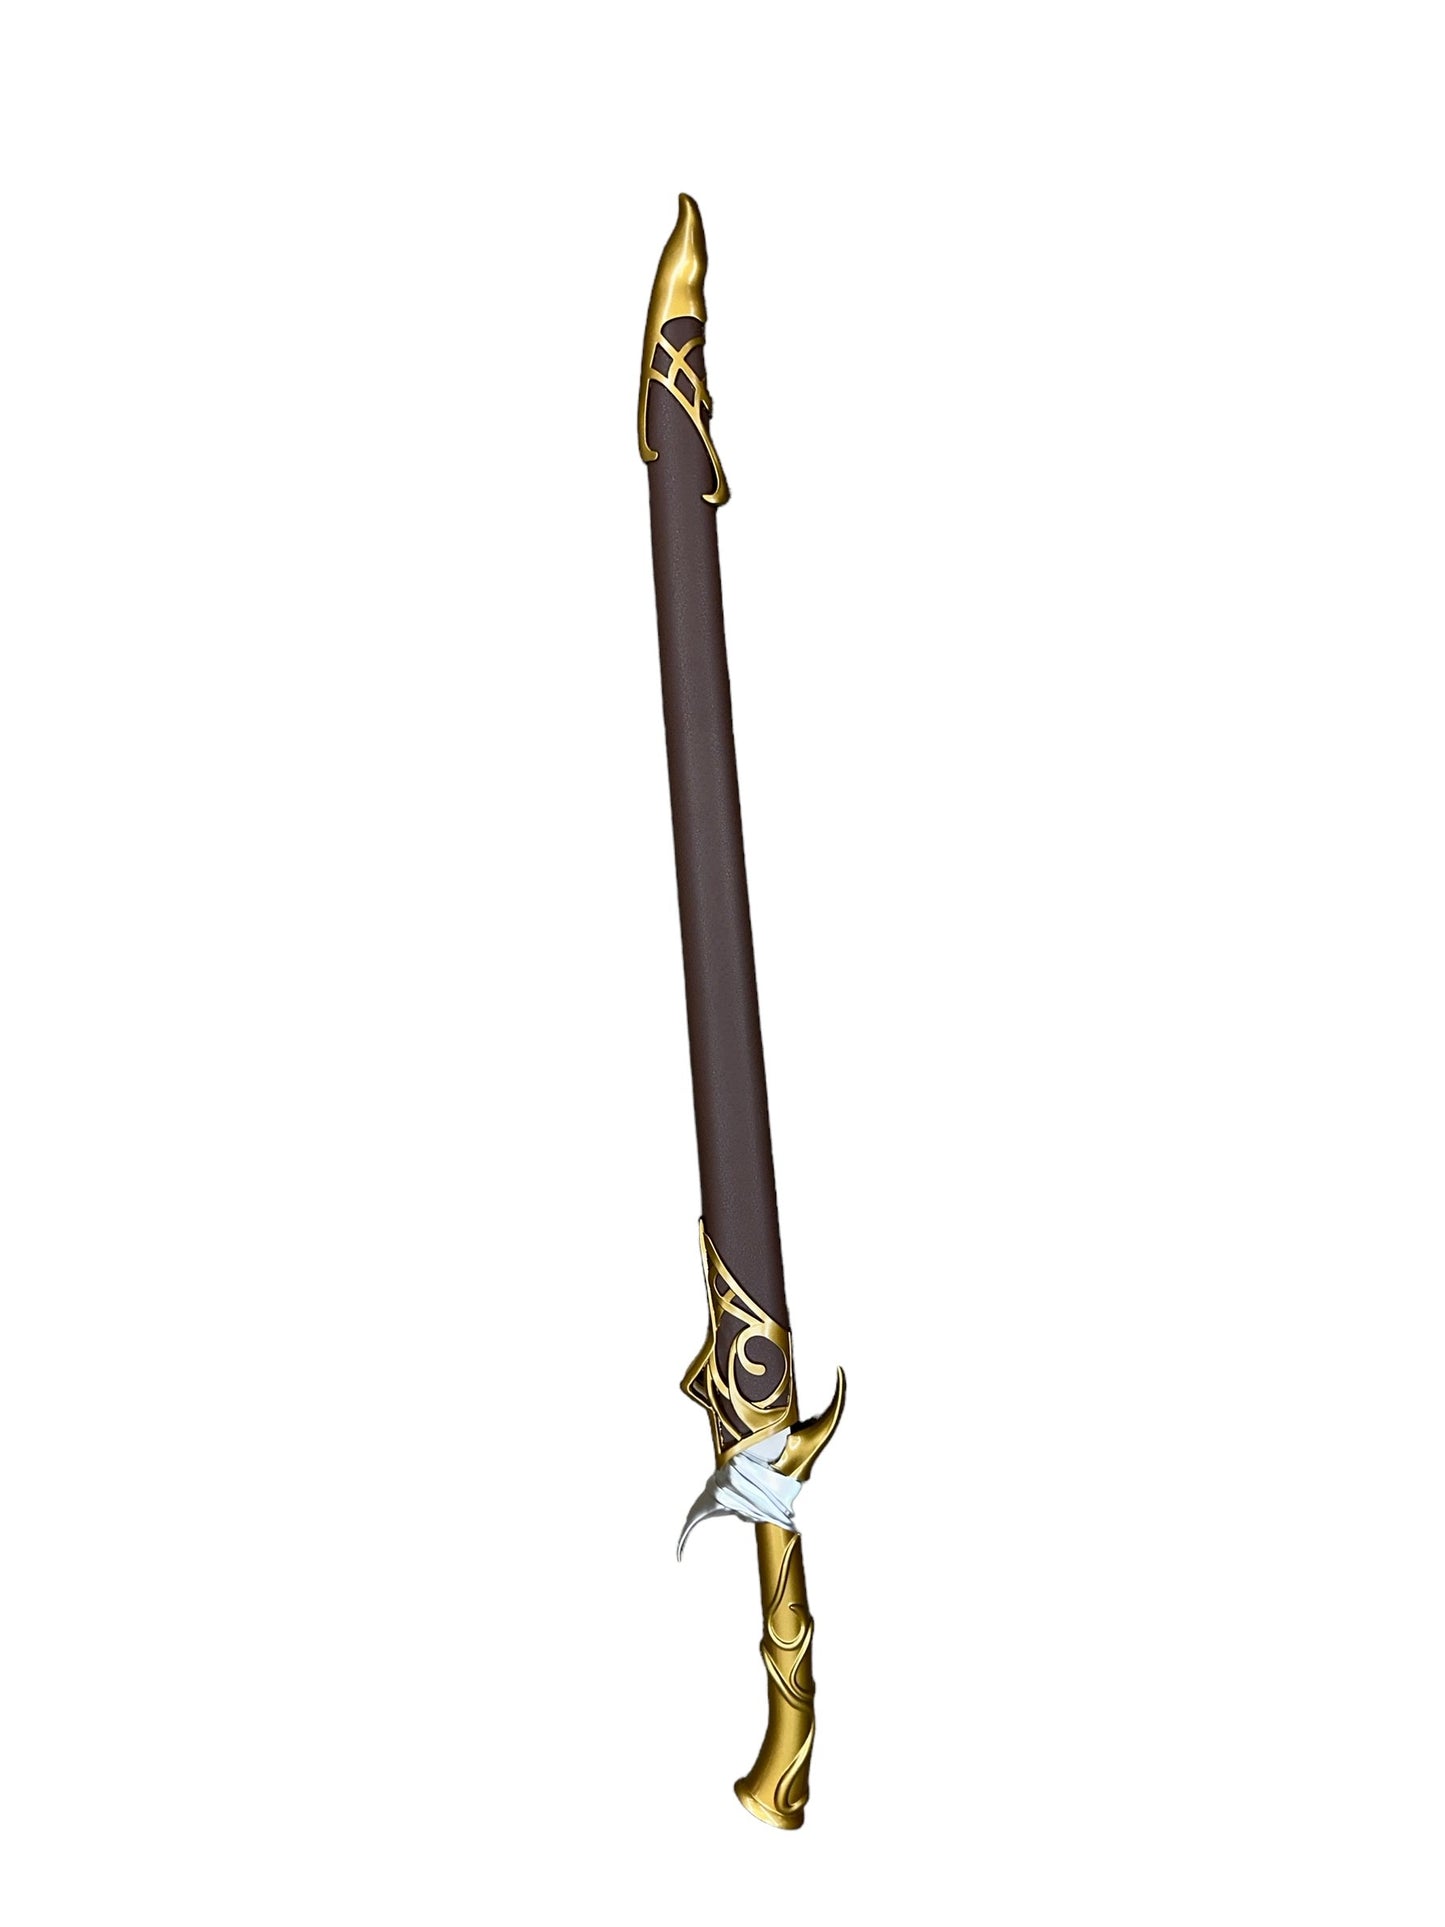 DND Metal Replica Sword